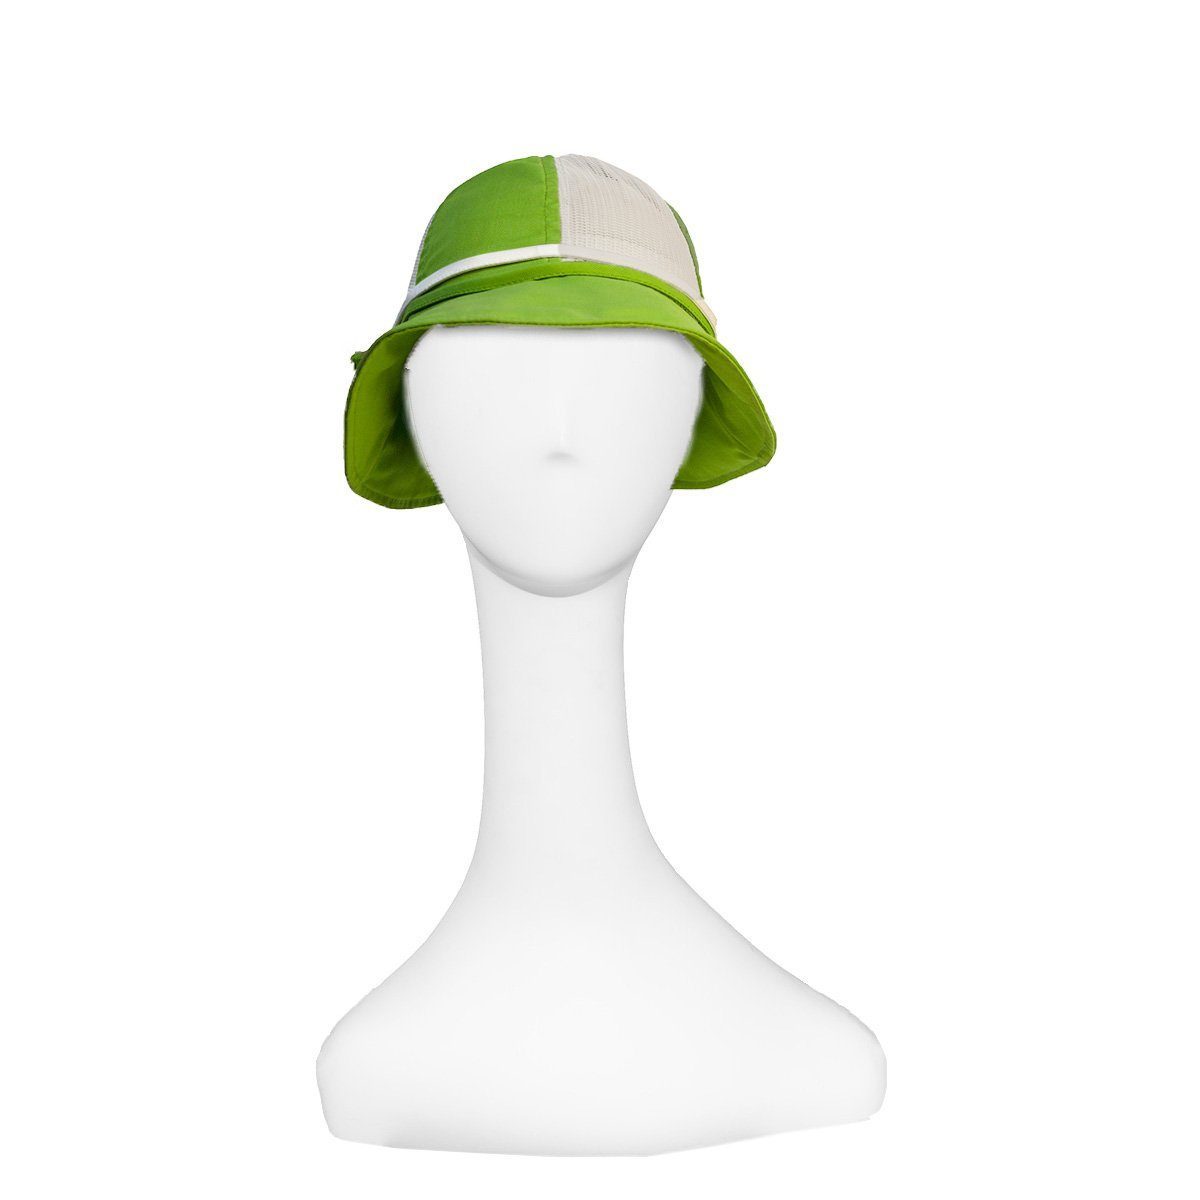 Tennis visor, golf hat in bright green